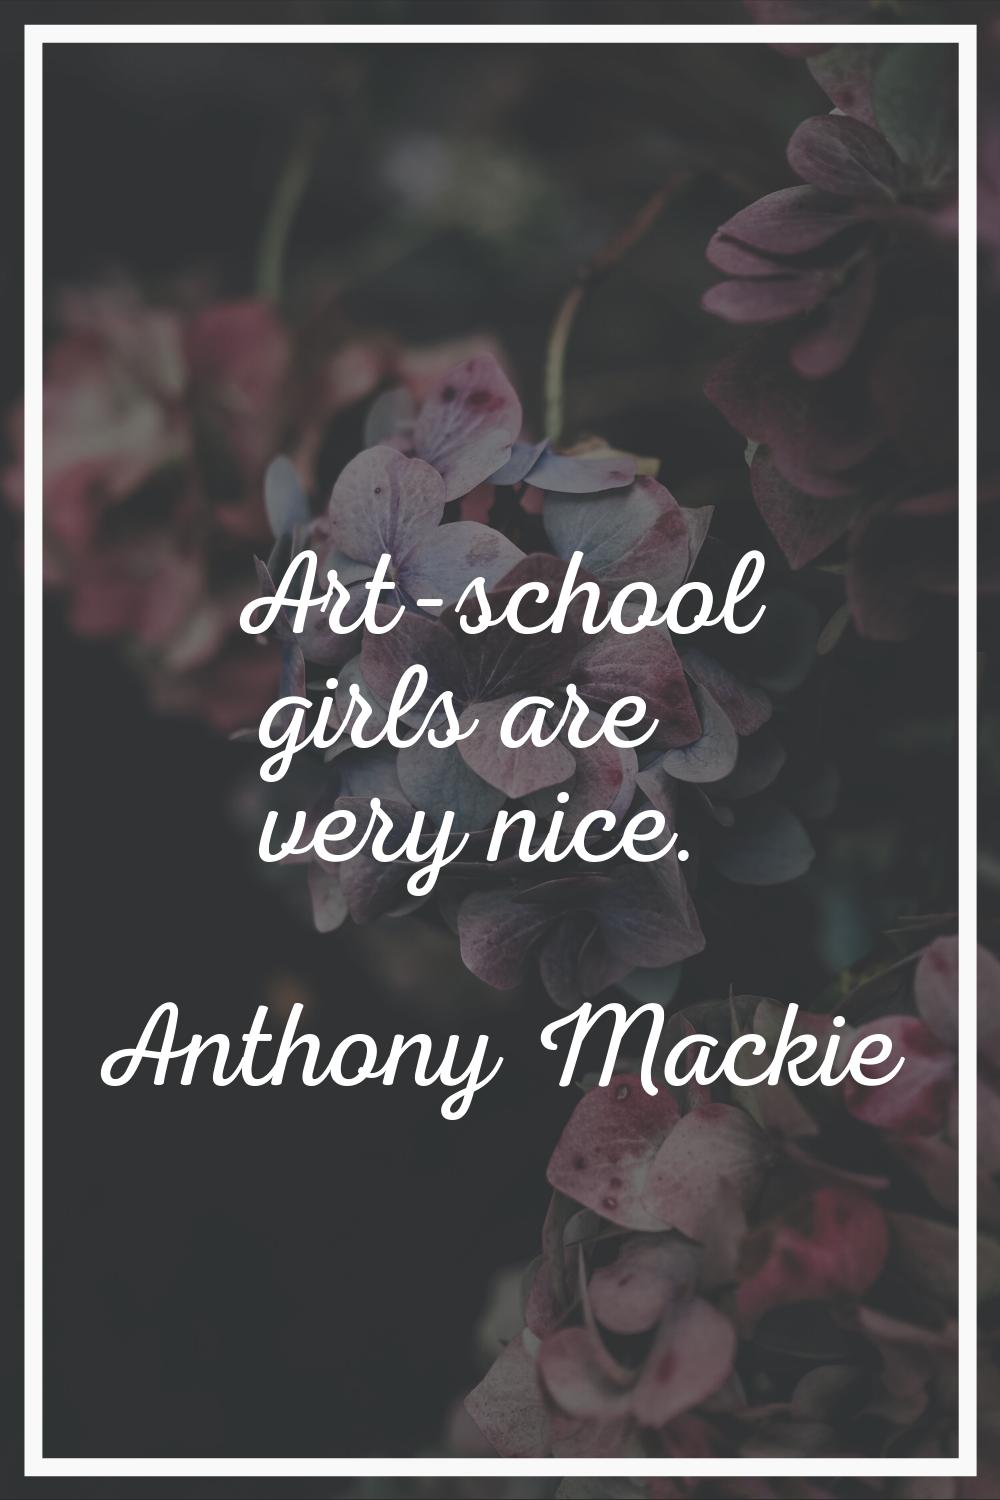 Art-school girls are very nice.